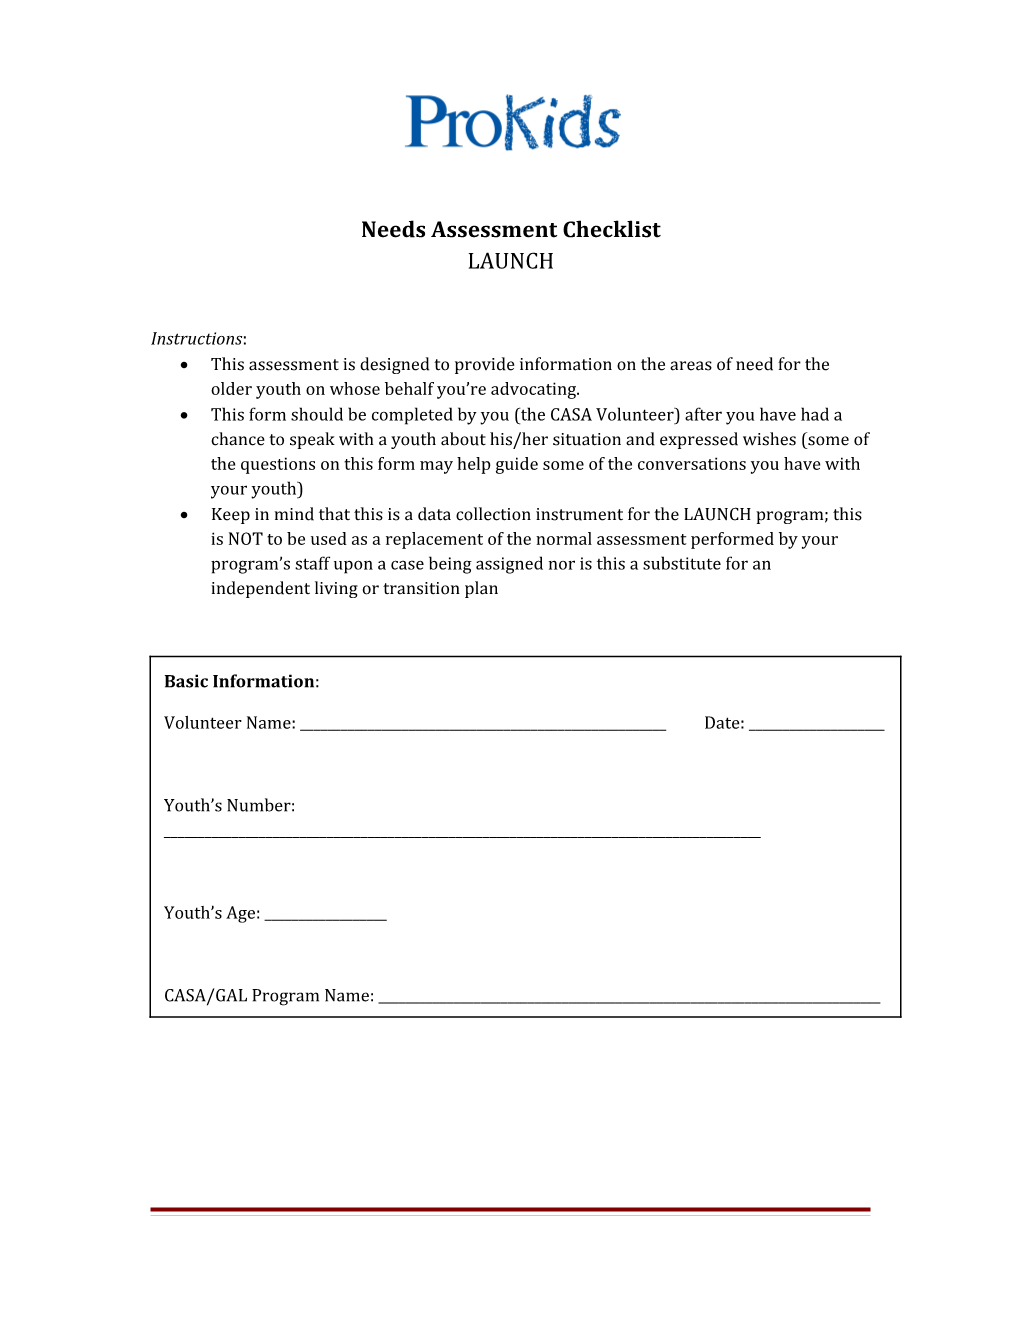 Needs Assessment Checklist - Tool